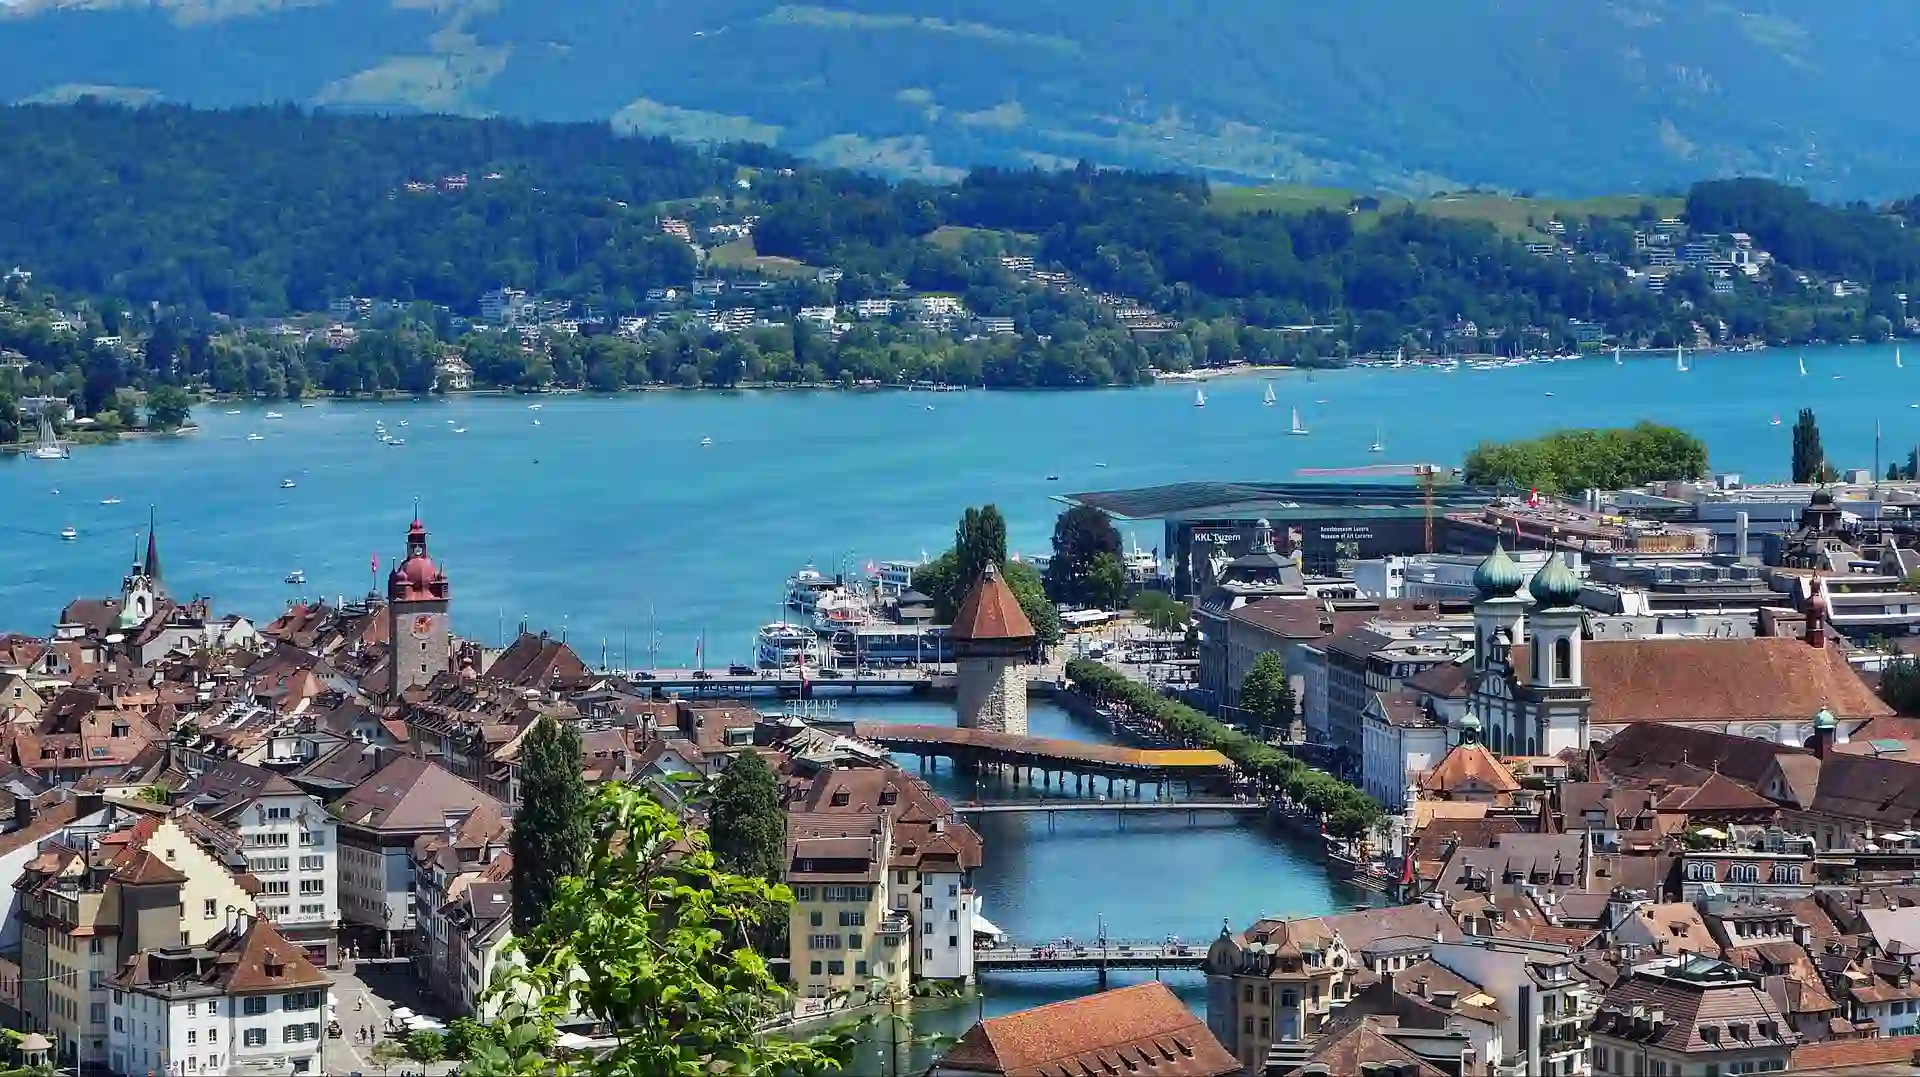 Day 1 - Arrival in Switzerland – Lucerne